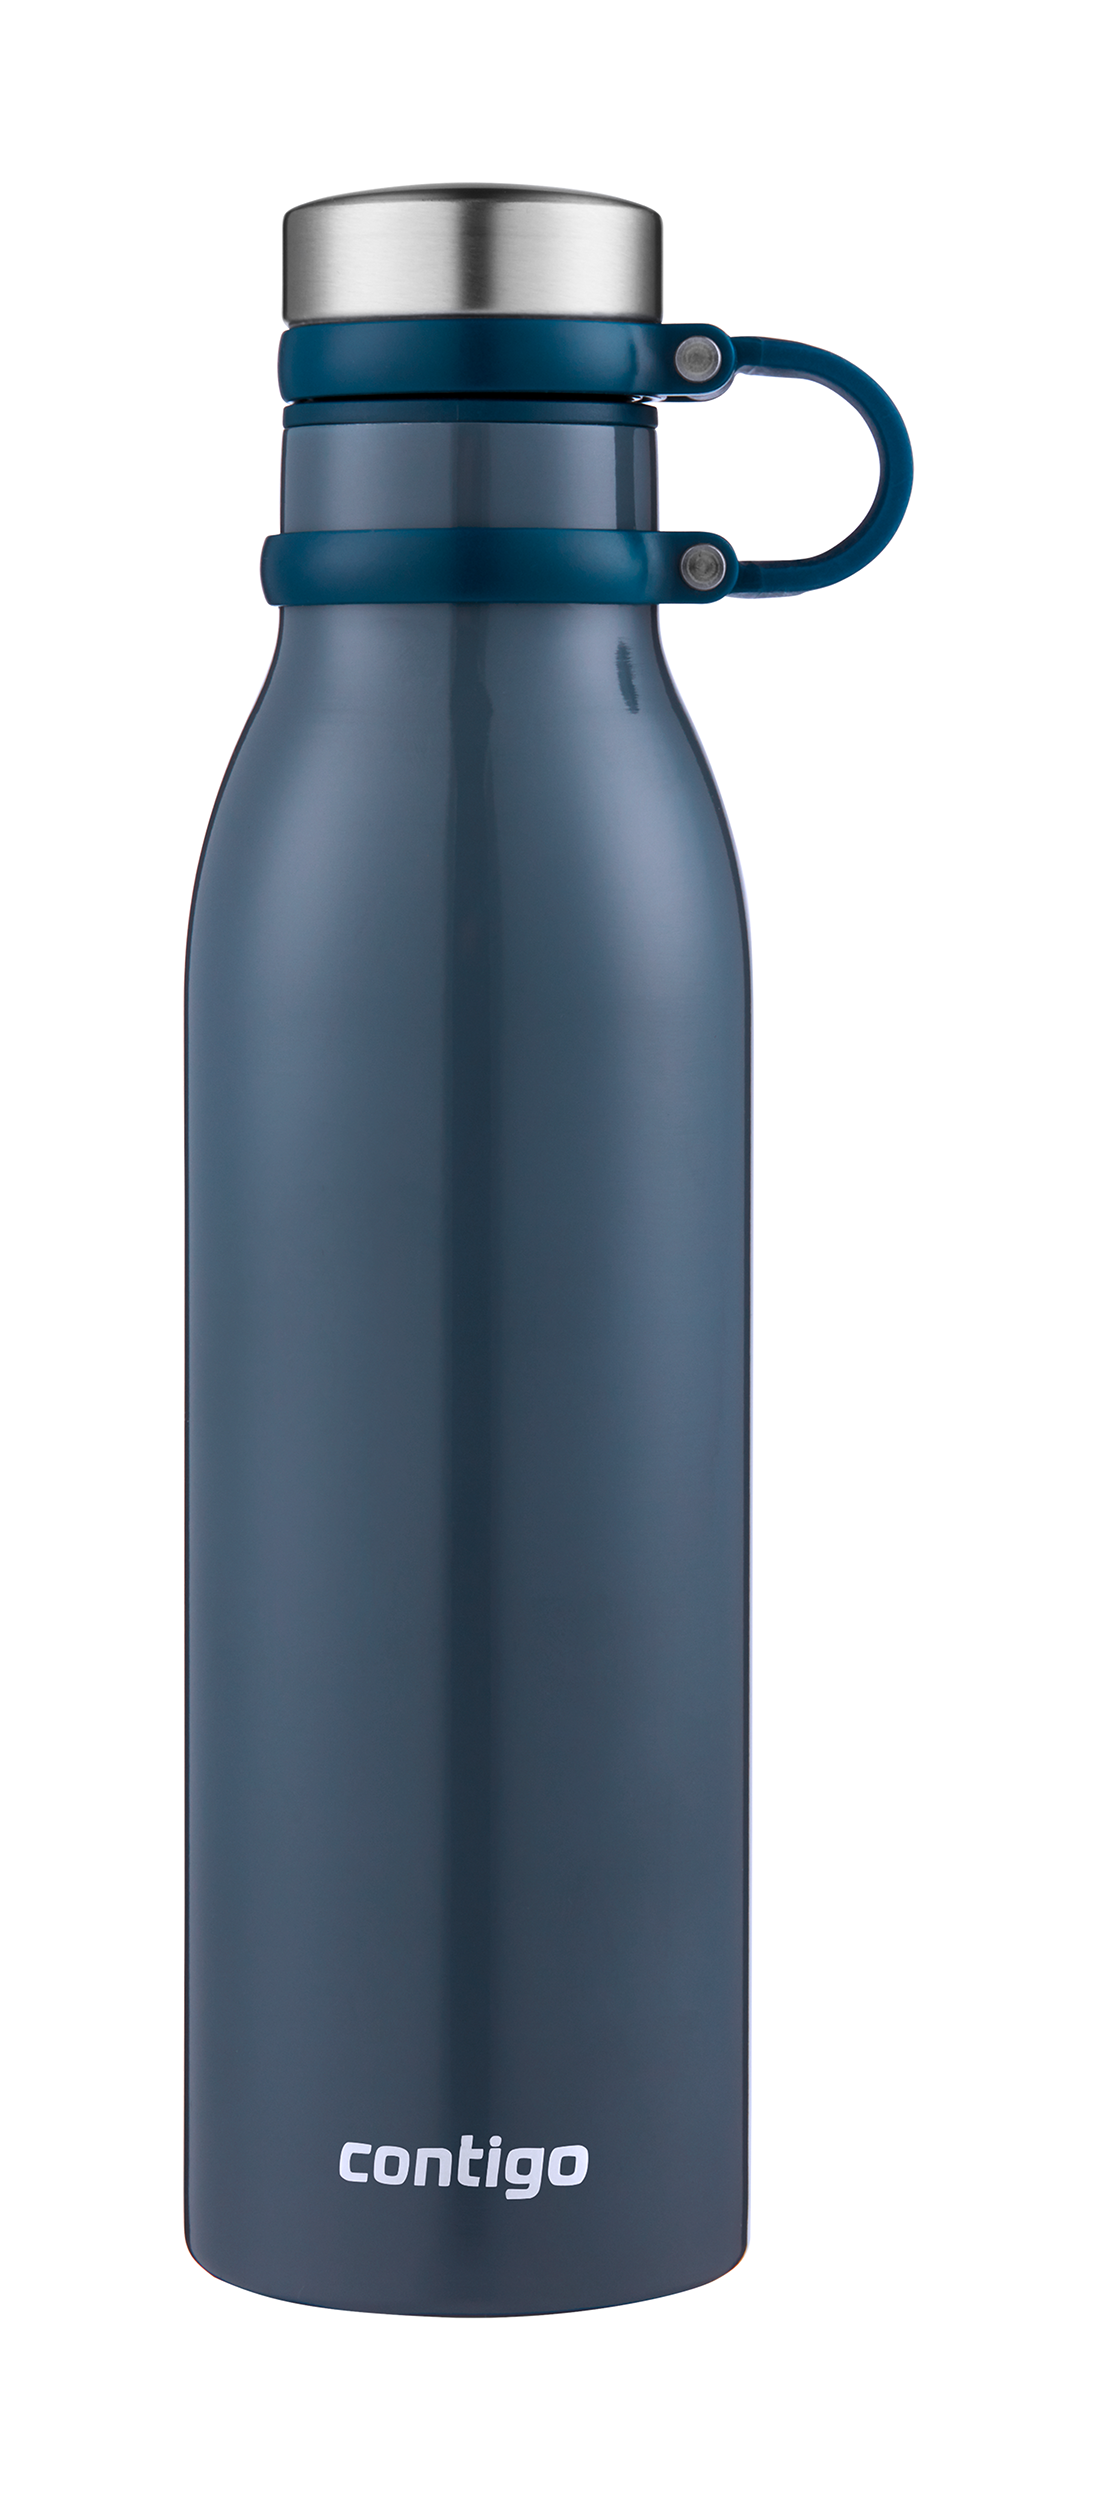 Contigo Autoseal Matterhorne Vacuum Insulated Stainless Steel Bottle 590 ml